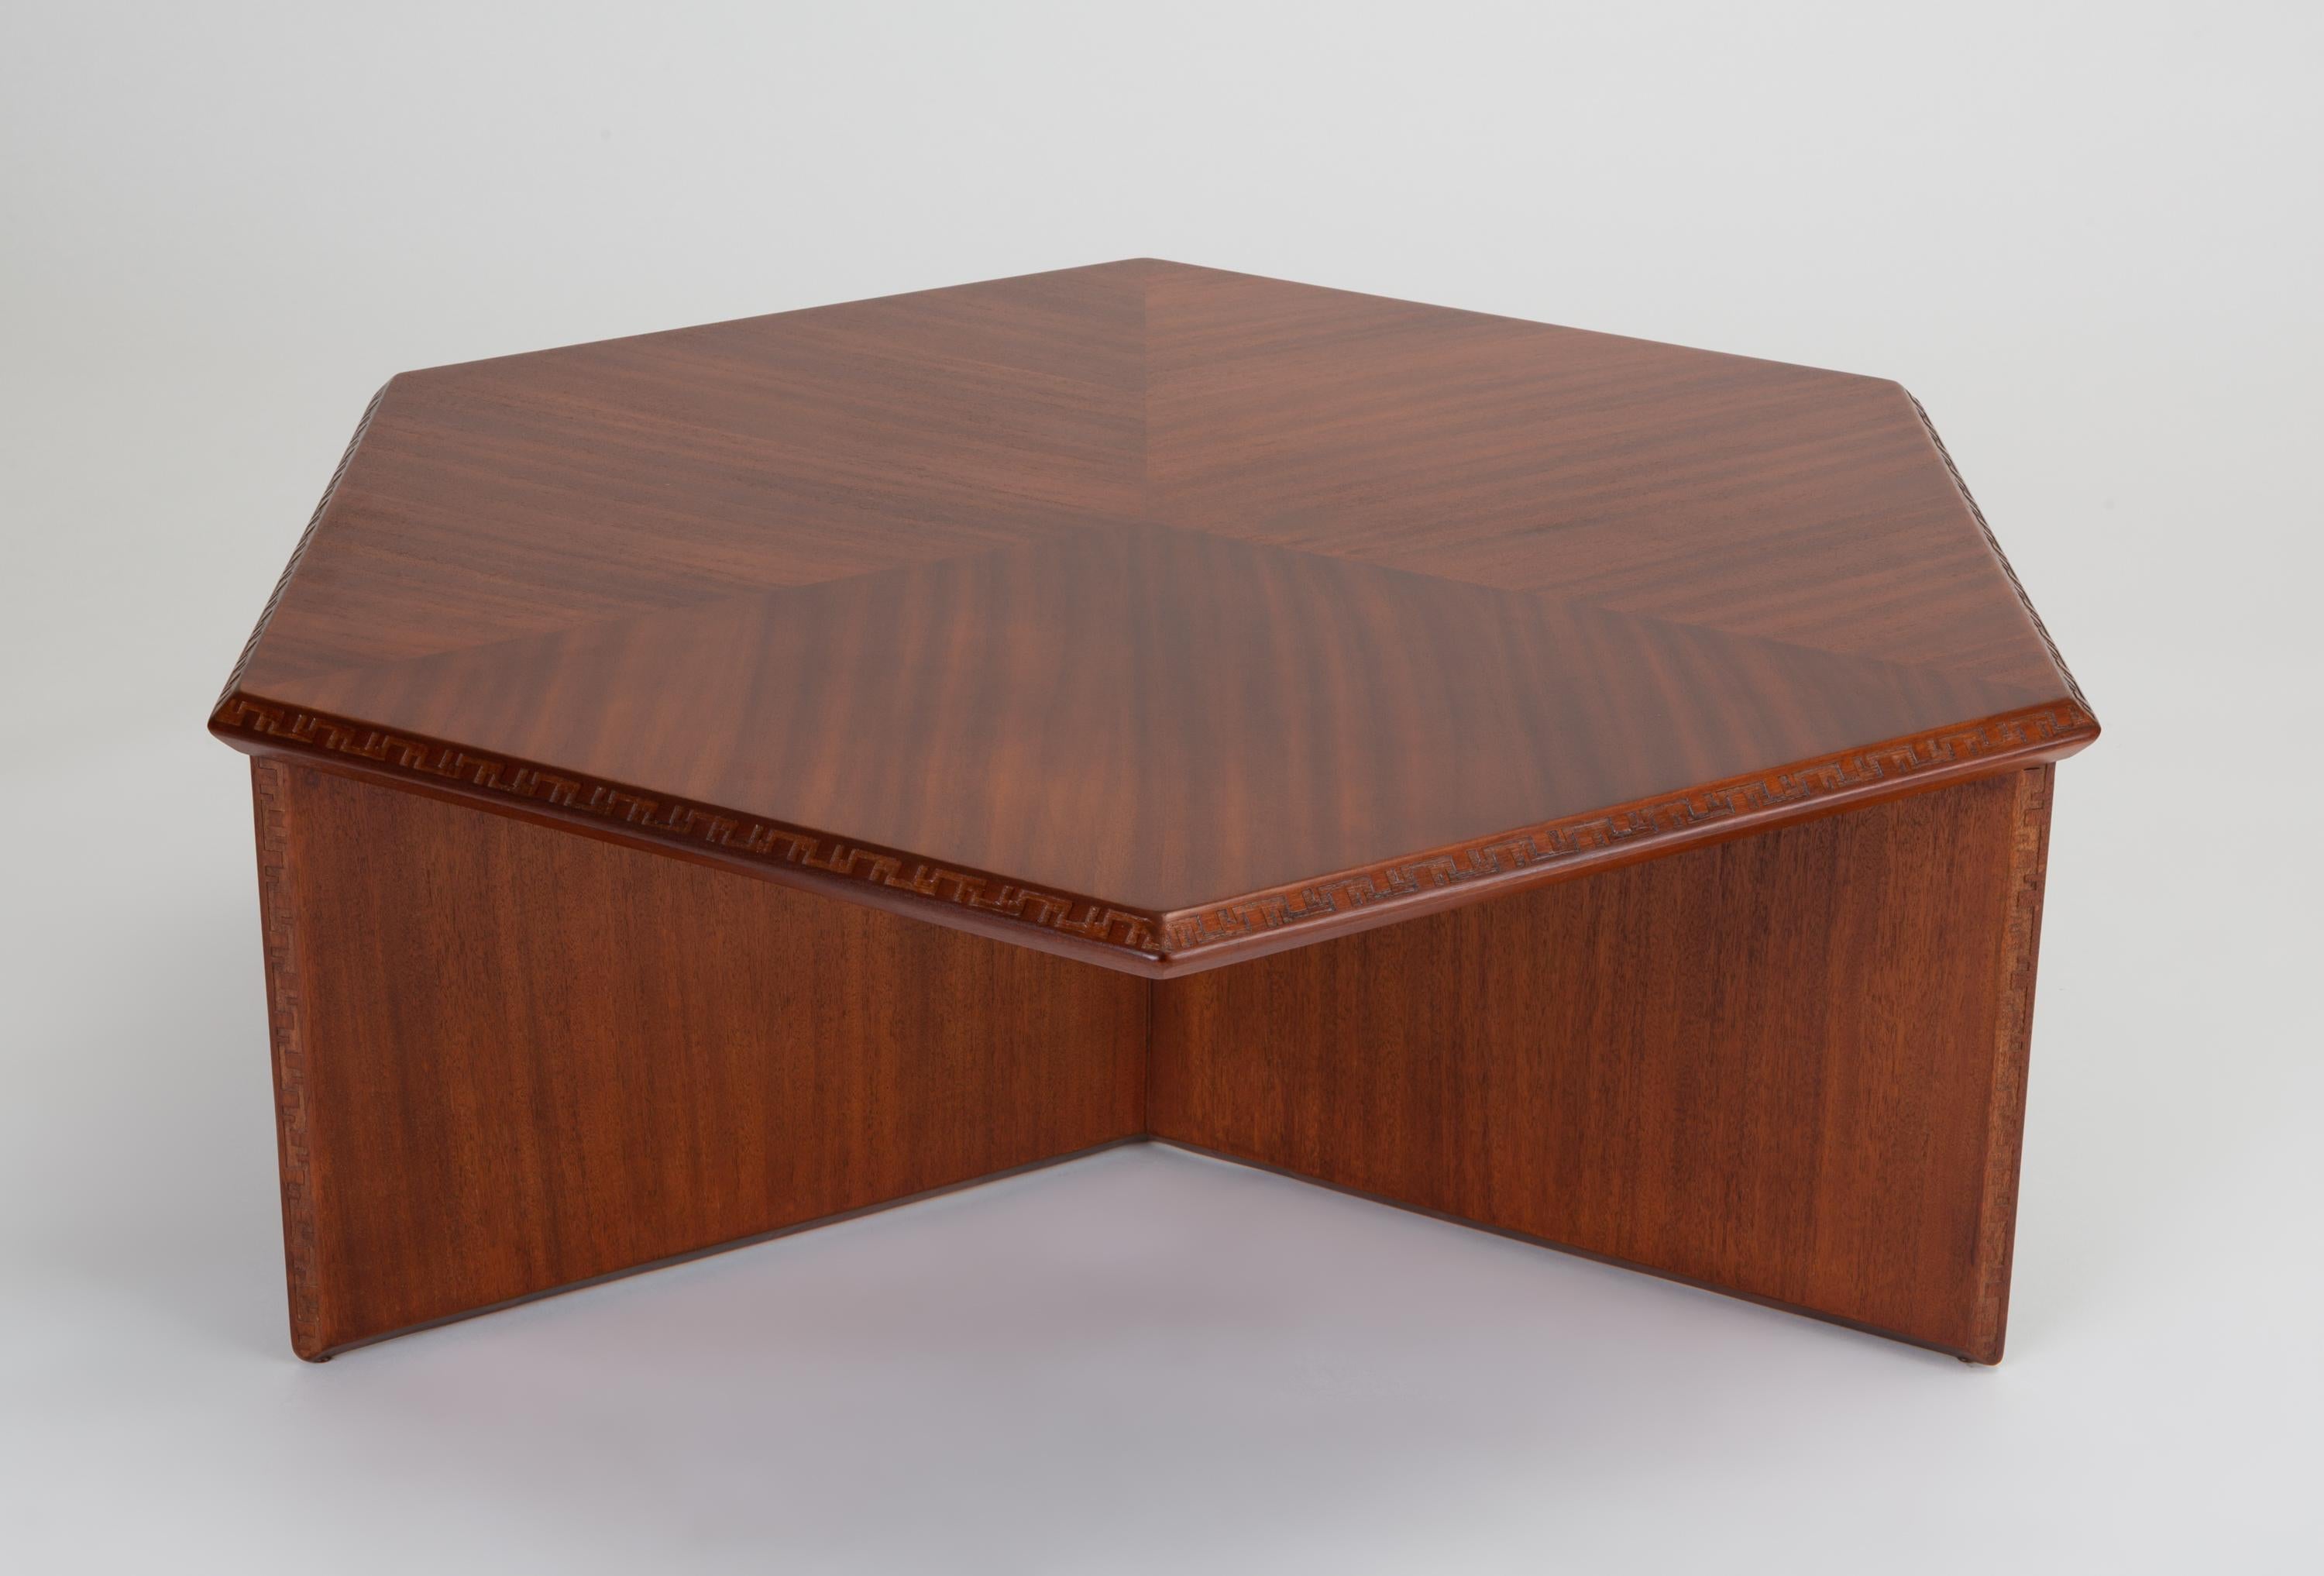 Frank Lloyd Wright “Taliesin” Coffee Table for Heritage-Henredon (Mitte des 20. Jahrhunderts)